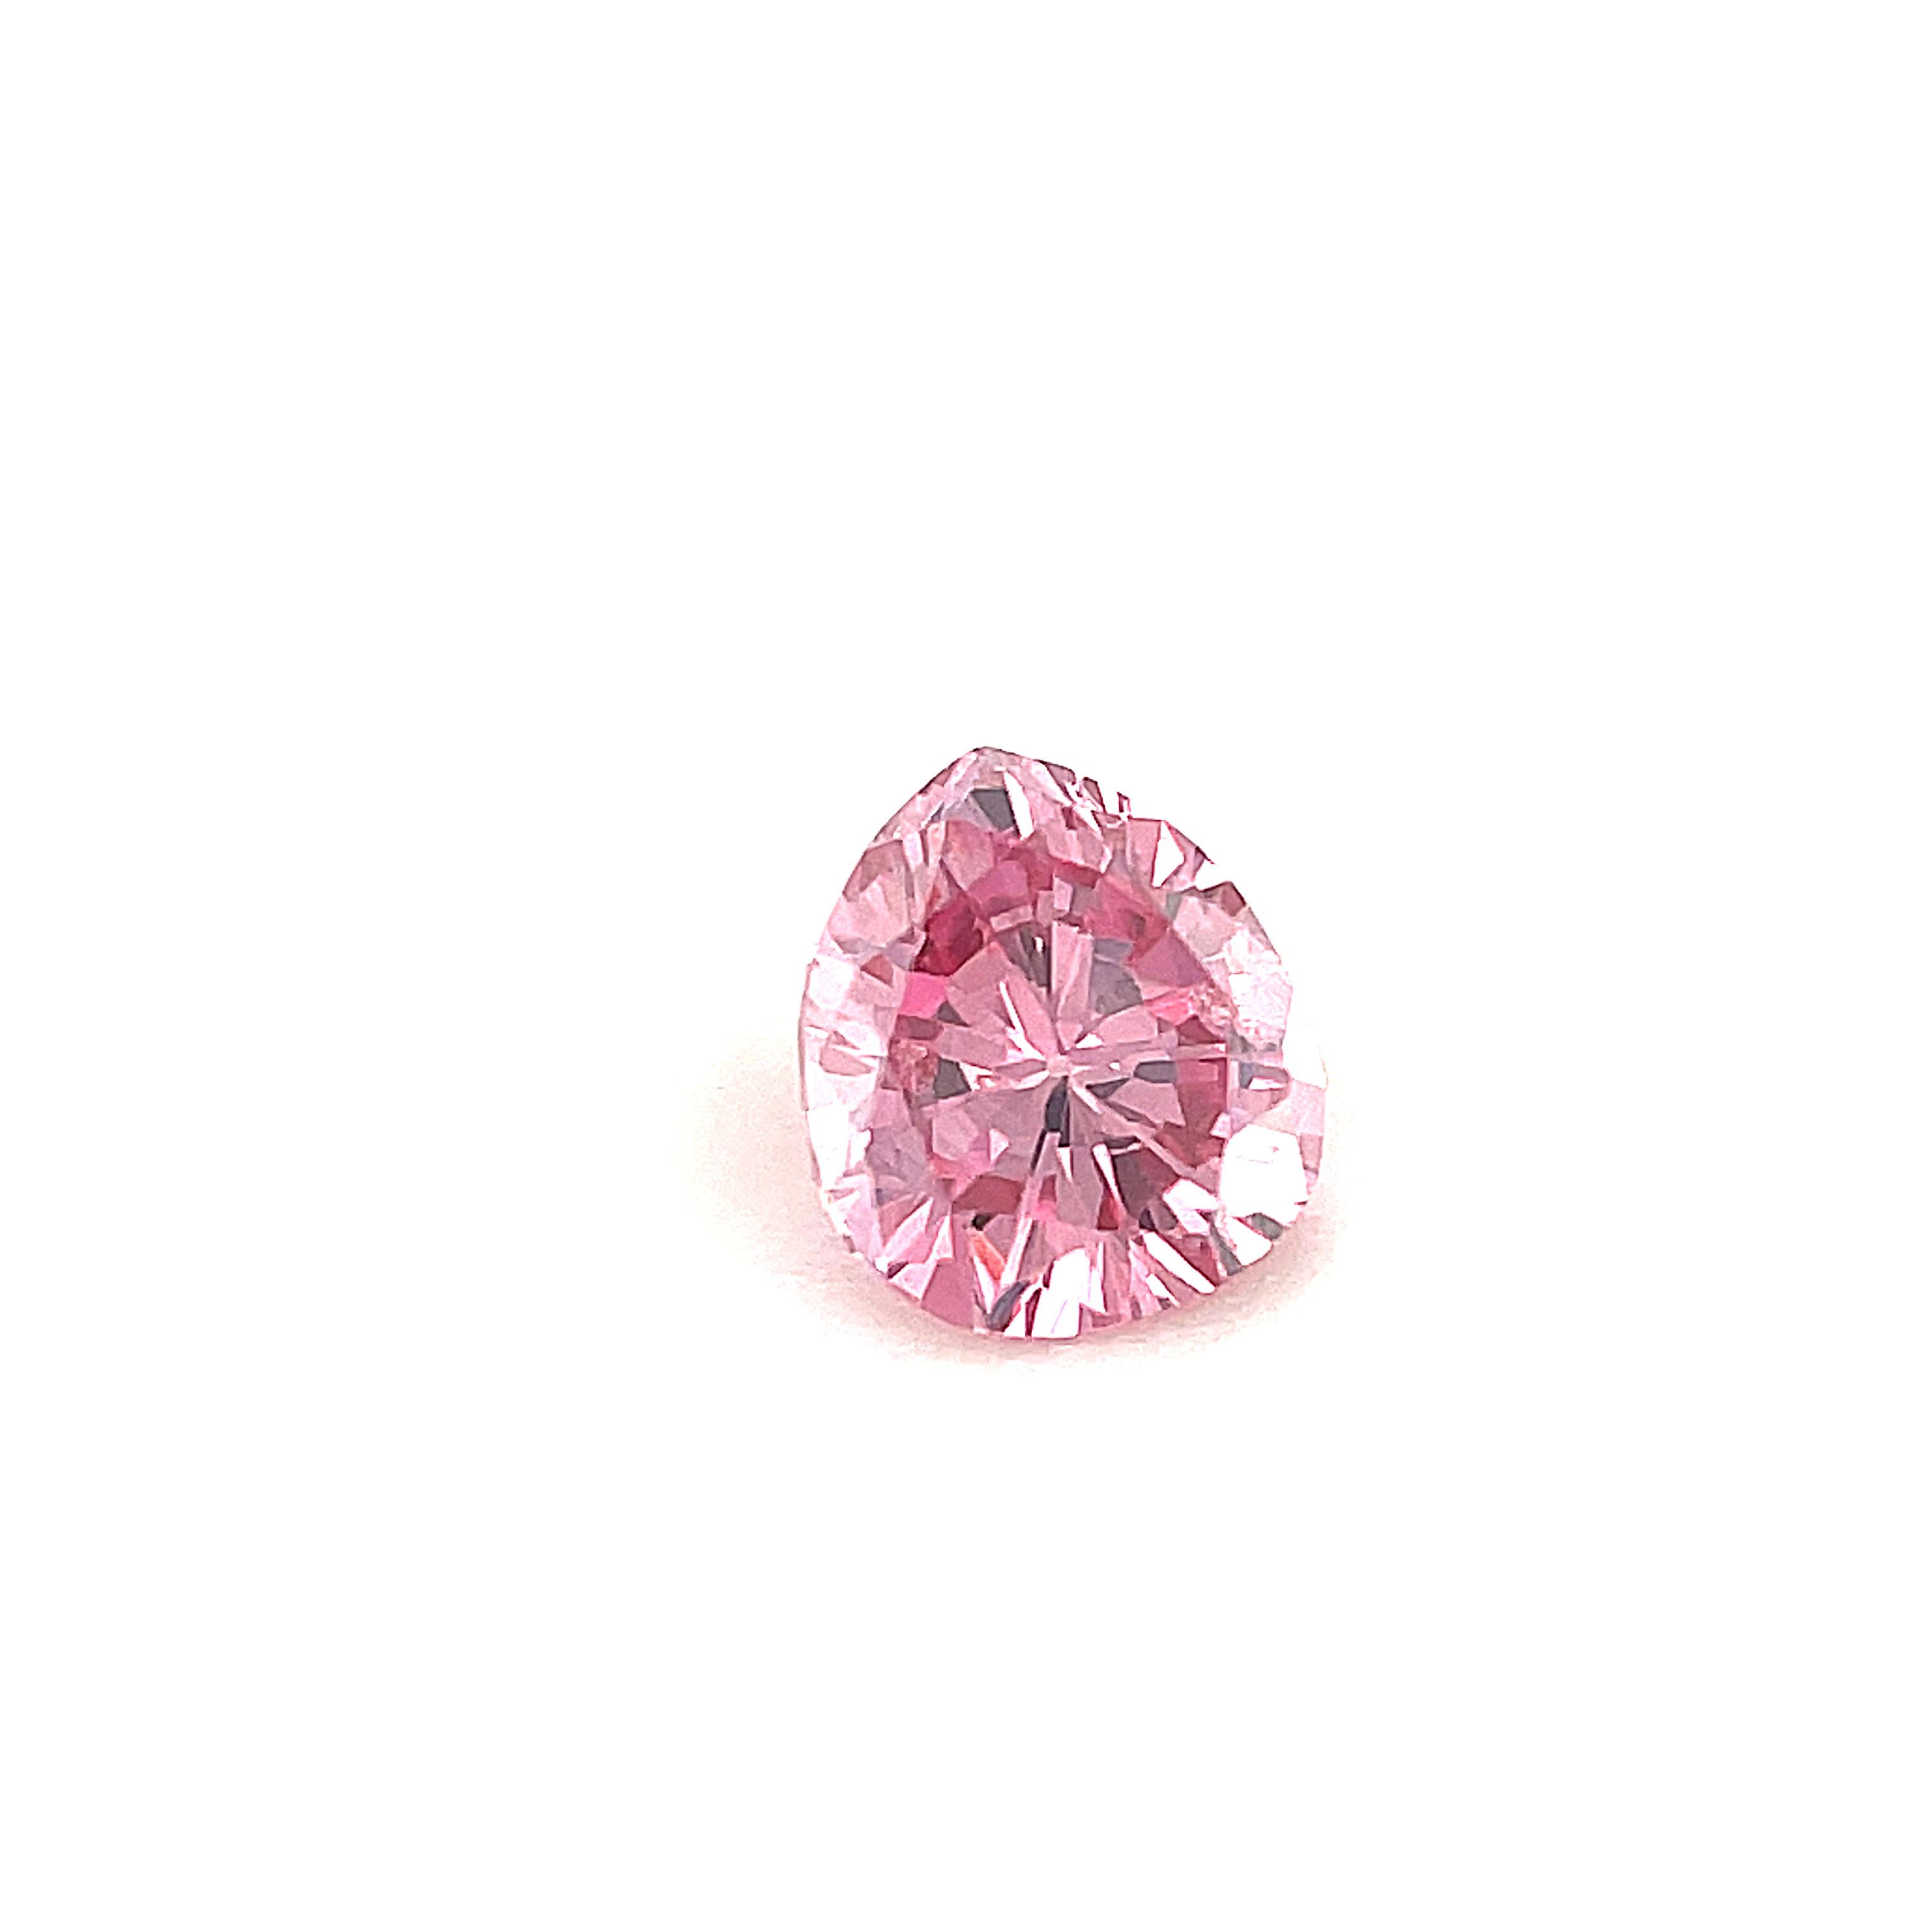 Pear Cut Fancy Intense Purplish Pink Natural Diamond, Loose .24 Carat Pear, GIA Certified For Sale